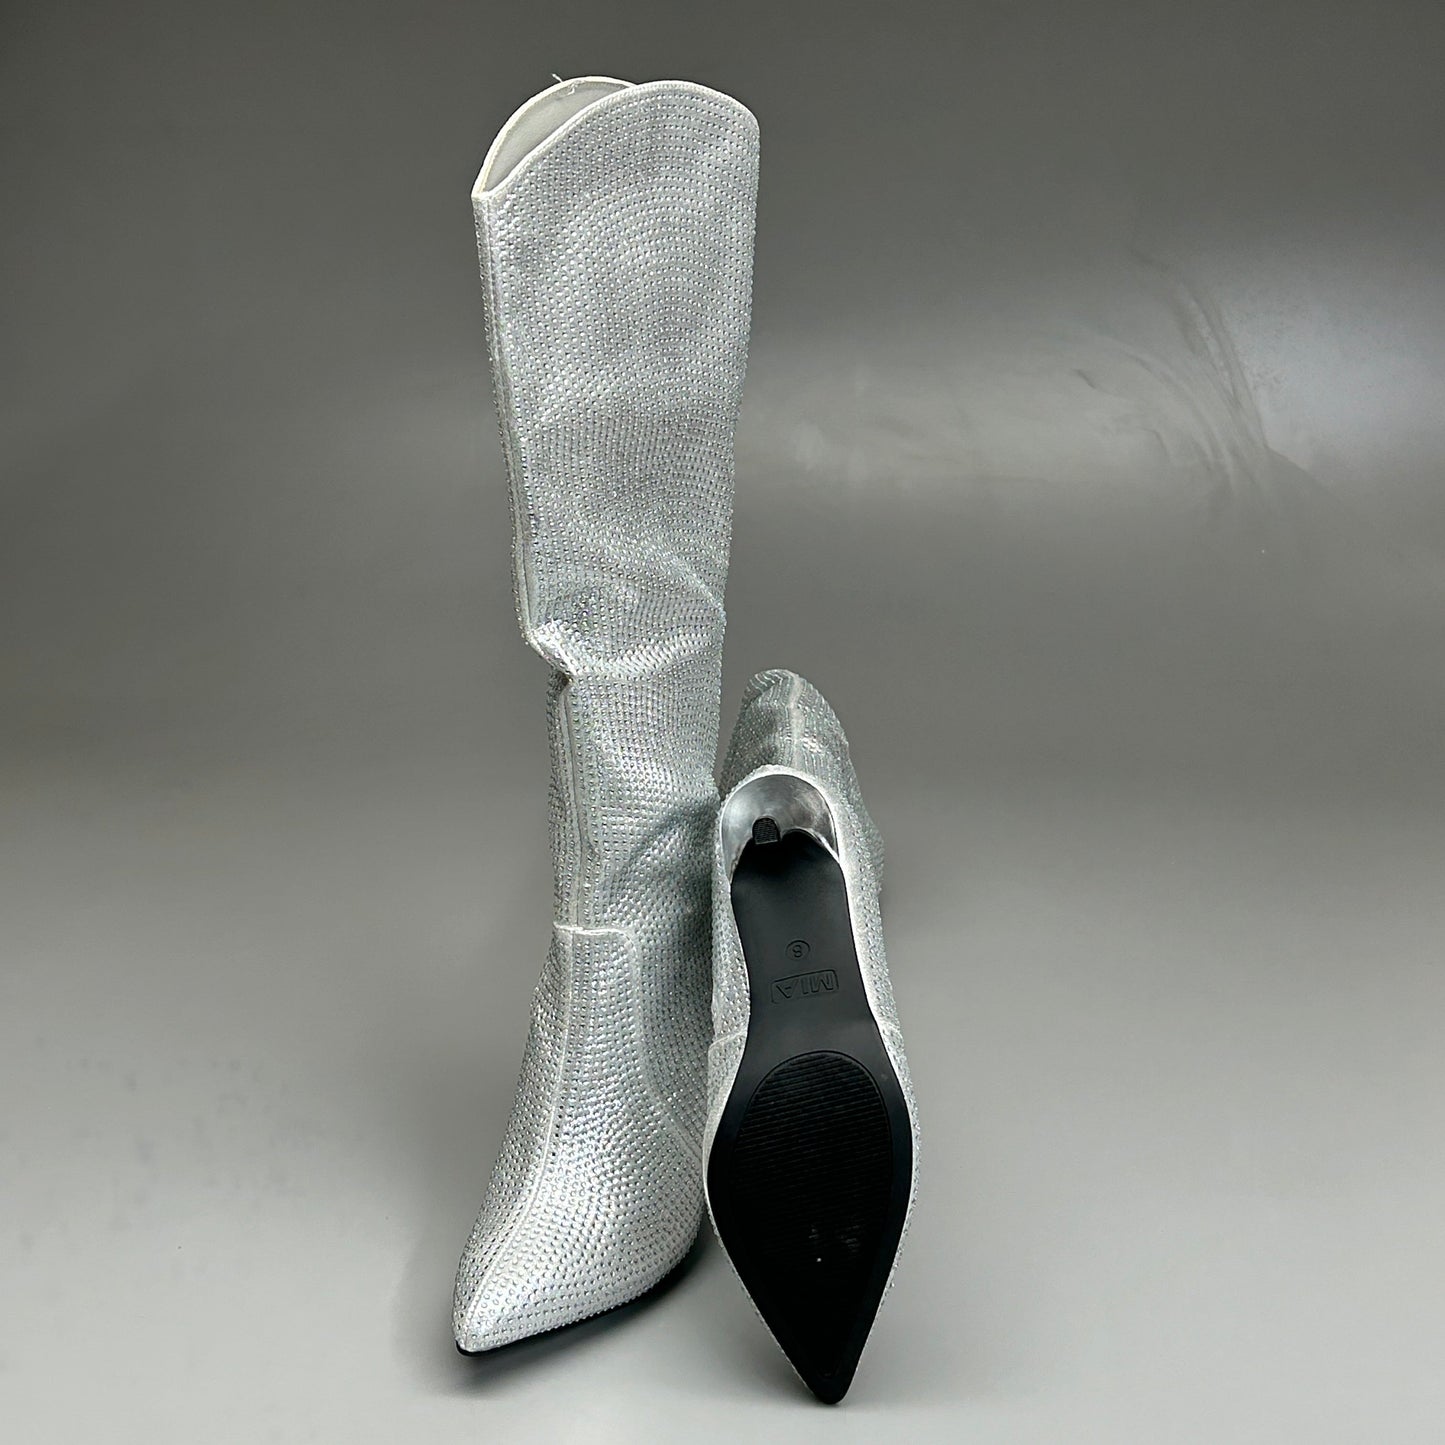 MIA Mackynzie Silver Stone Tall Heeled Boots Sz 7M Q100302